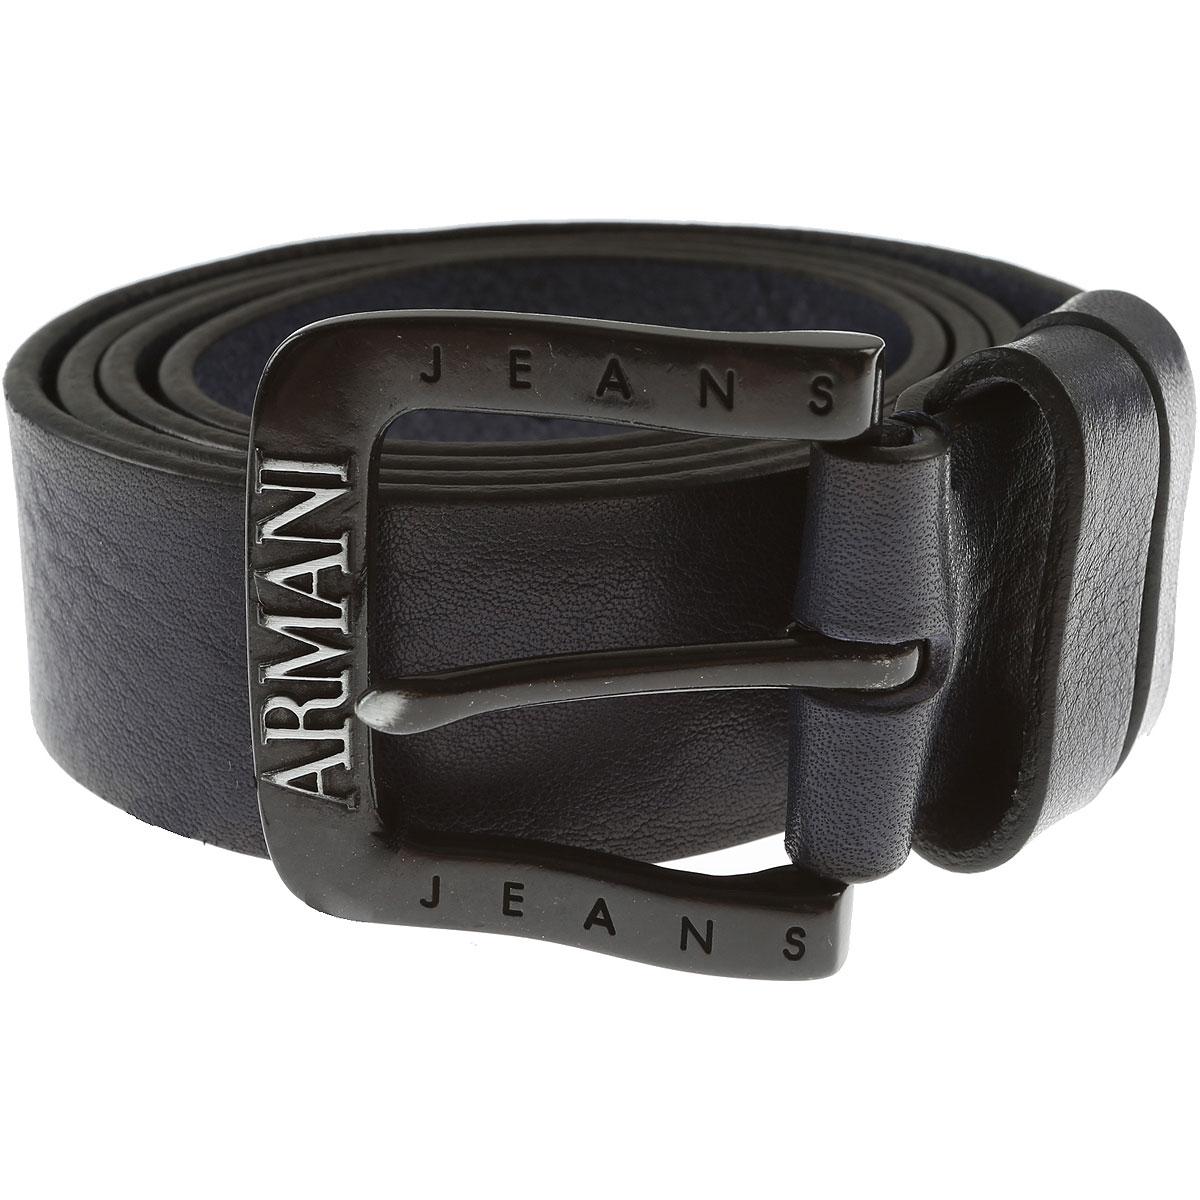 Armani Jeans Belt Sale Zealand, 57% -